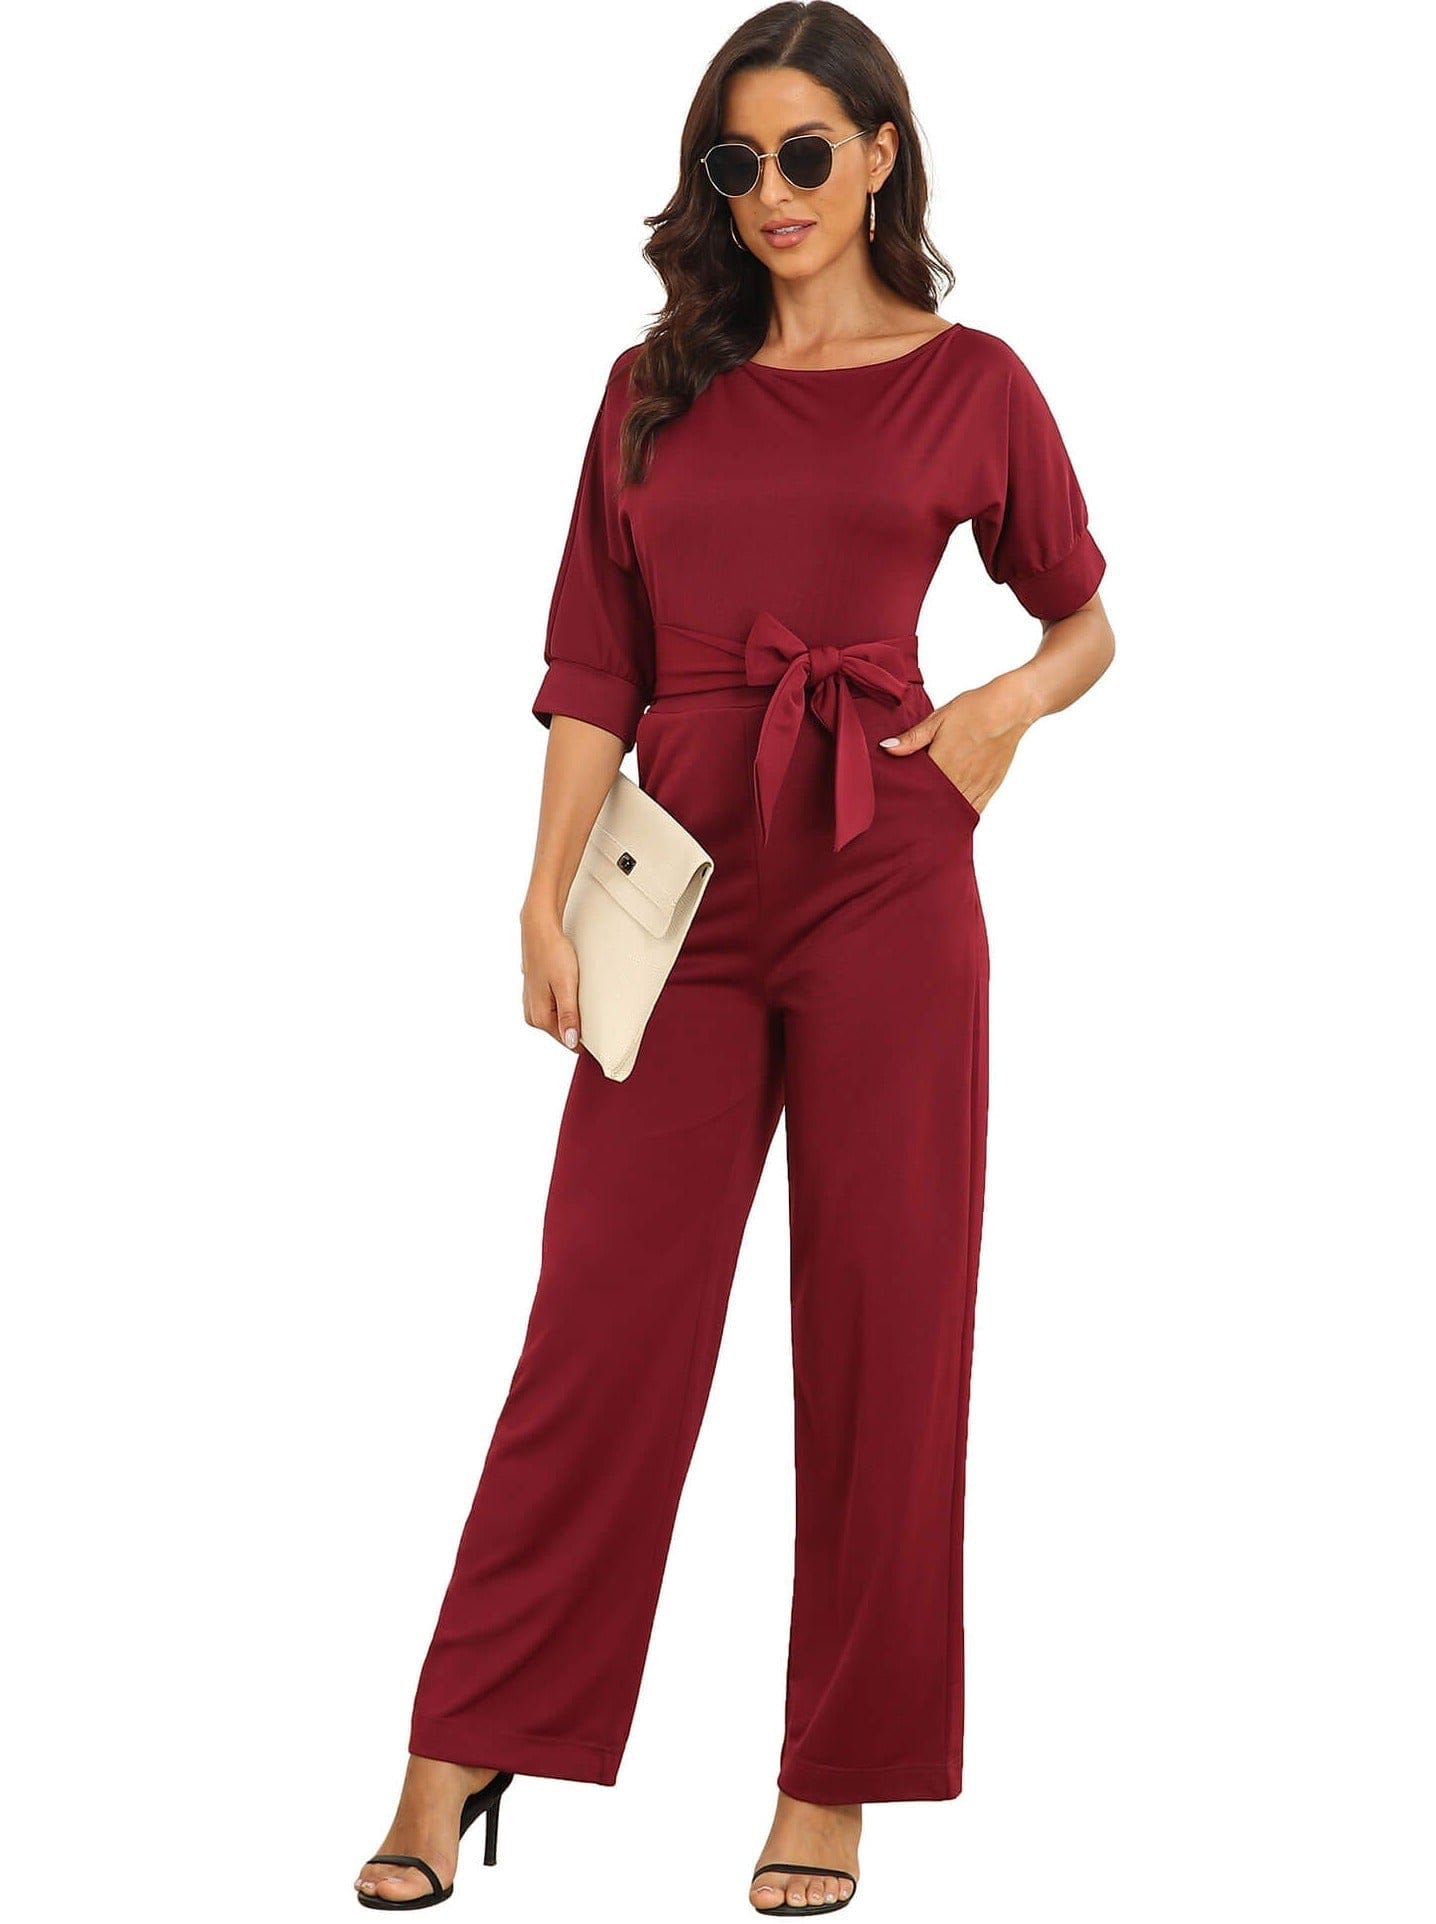 Dressy Jumpsuits for Women - Beige - Loose, Casual, Off-Shoulder, Wide Leg, Elastic Waist, Stretchy, 3/4 Sleeve